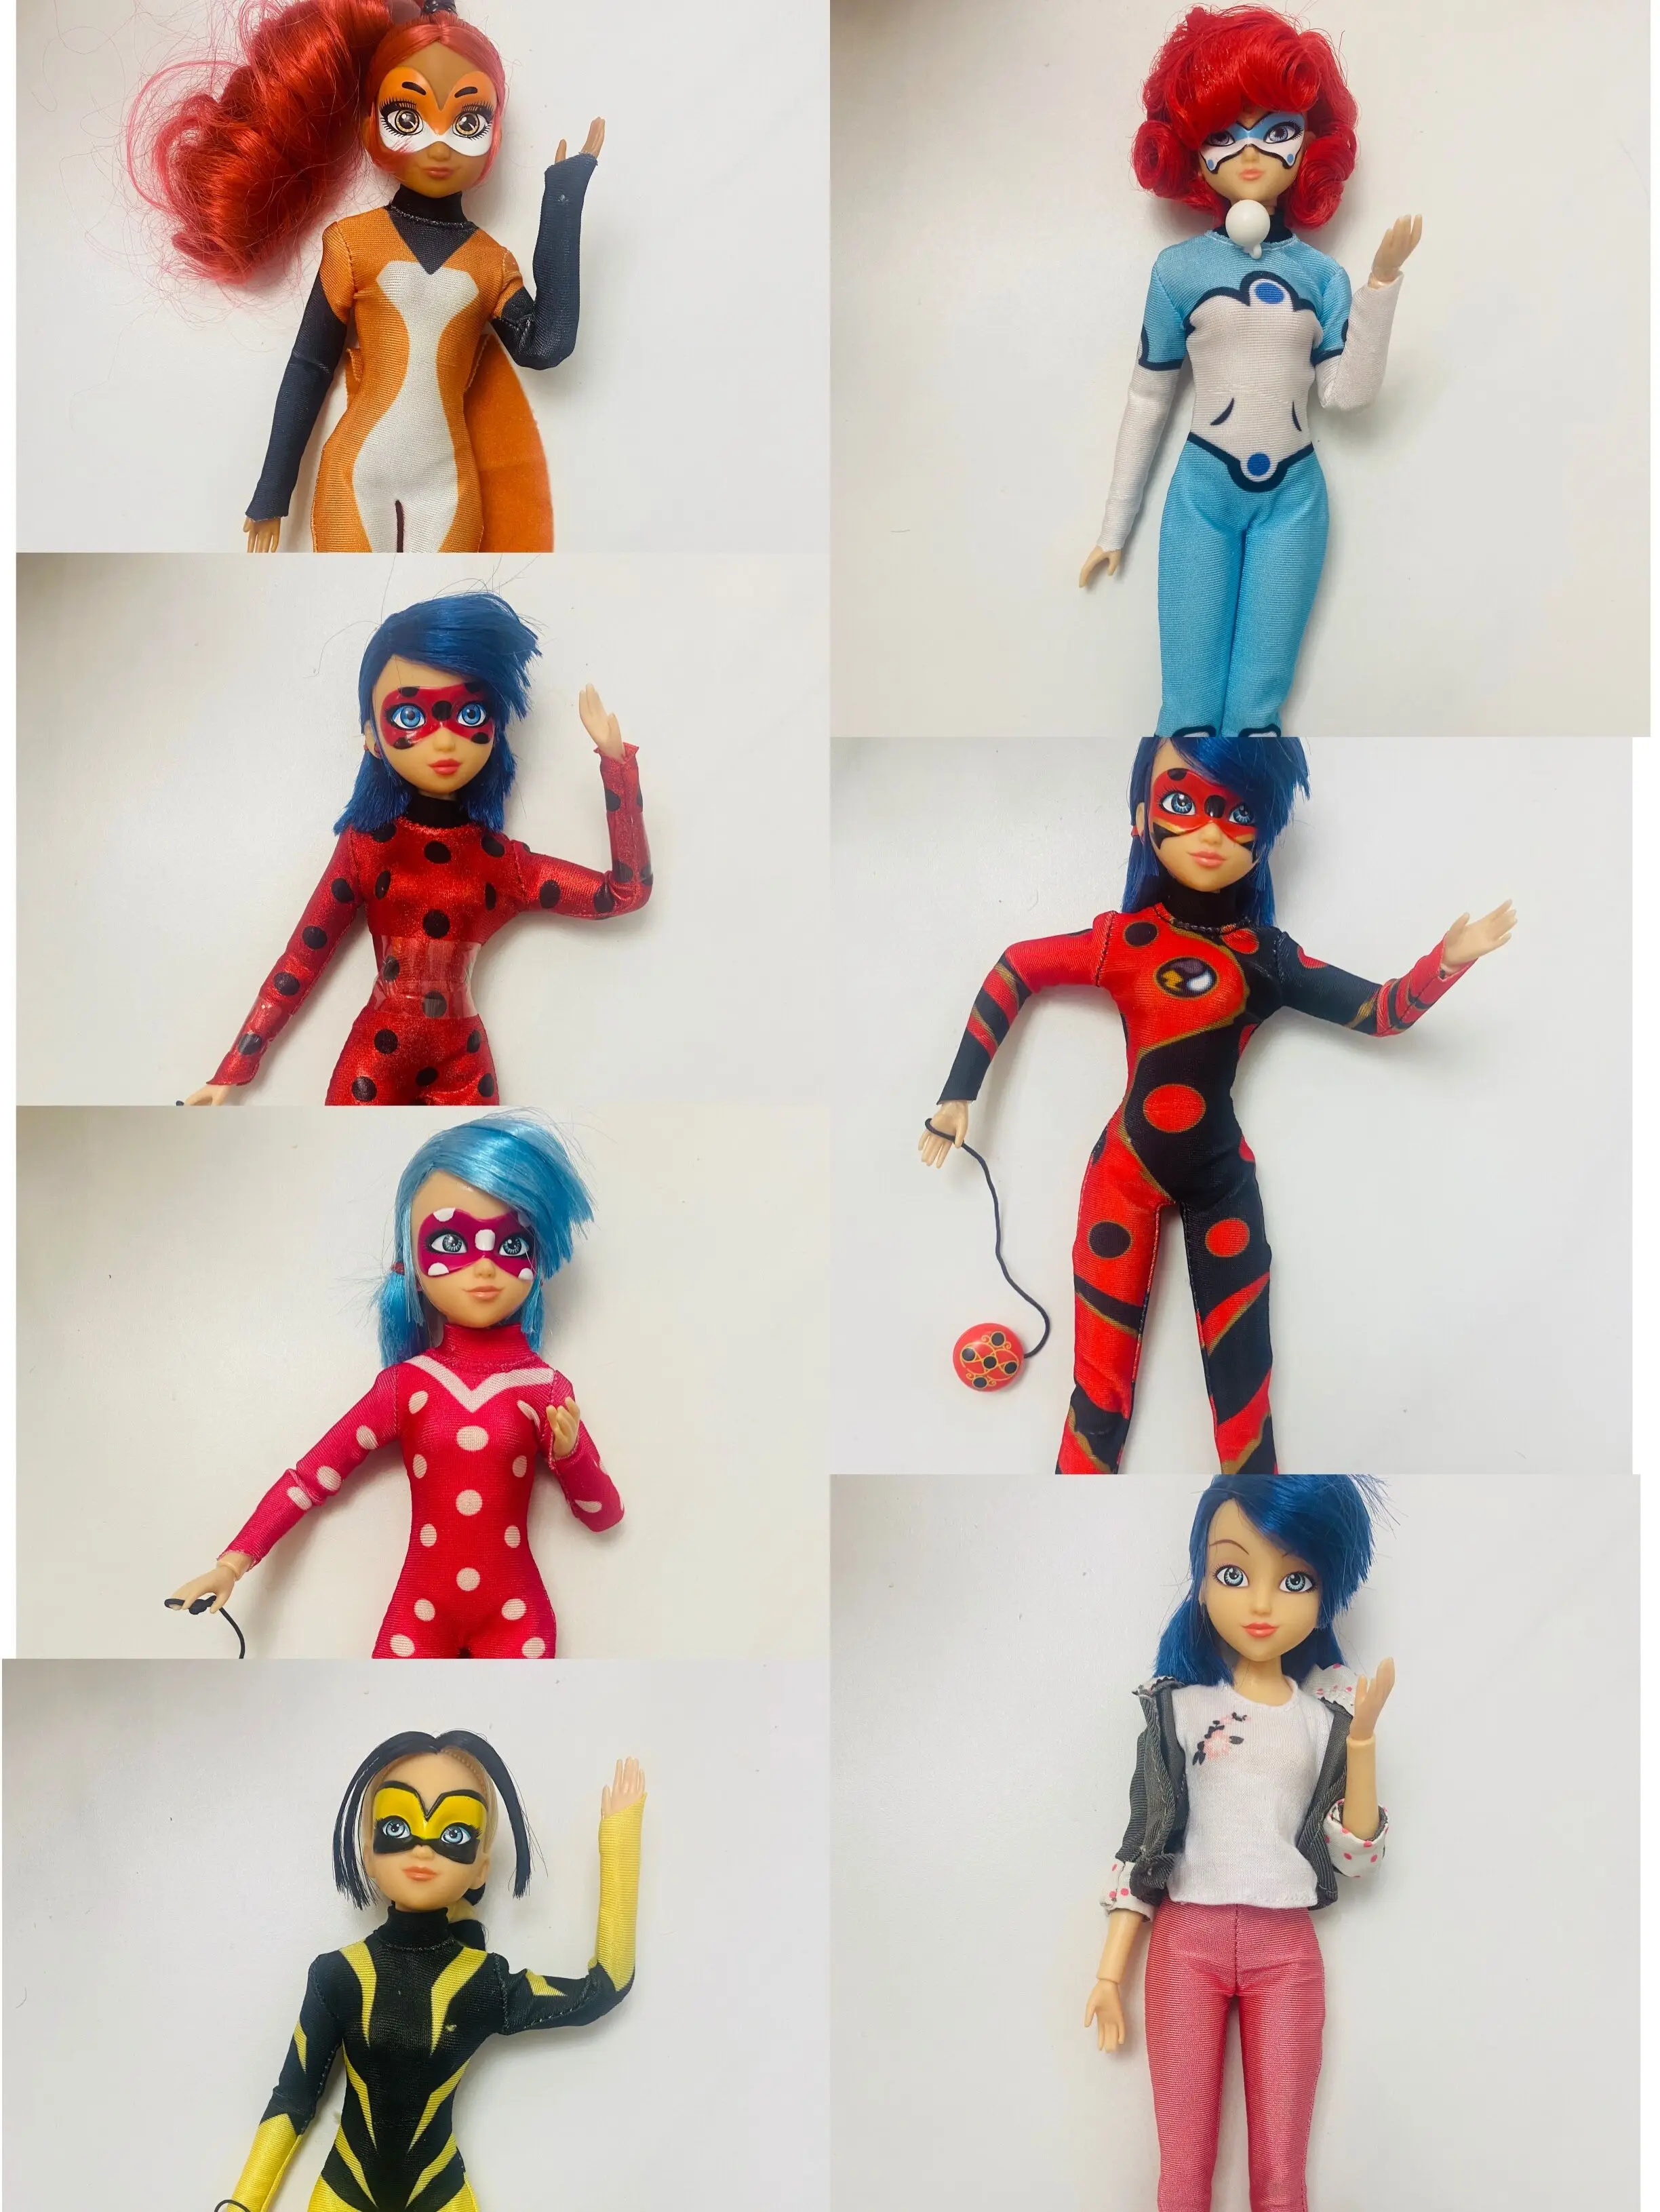 

Кукла Принцесса BJD Blyth Bratzdoll с аксессуарами, оригинальная модная Кукла, коллекционная кукла Bjd Pullip